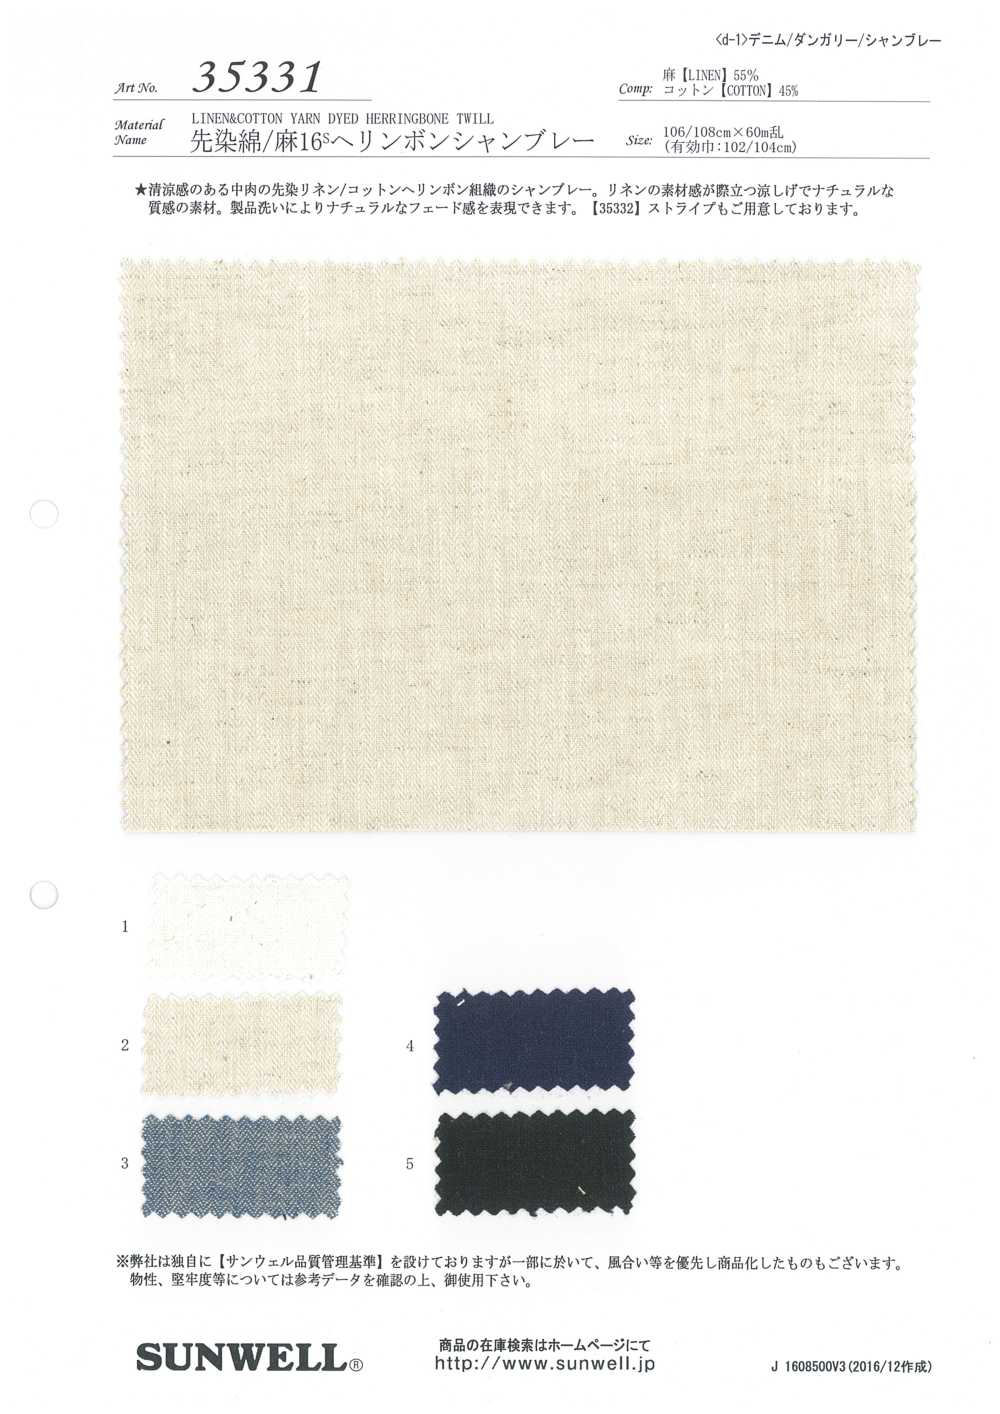 35331 Algodón Teñido En Hilo/ Lino Chambray De Espiga De 16 Hilos[Fabrica Textil] SUNWELL